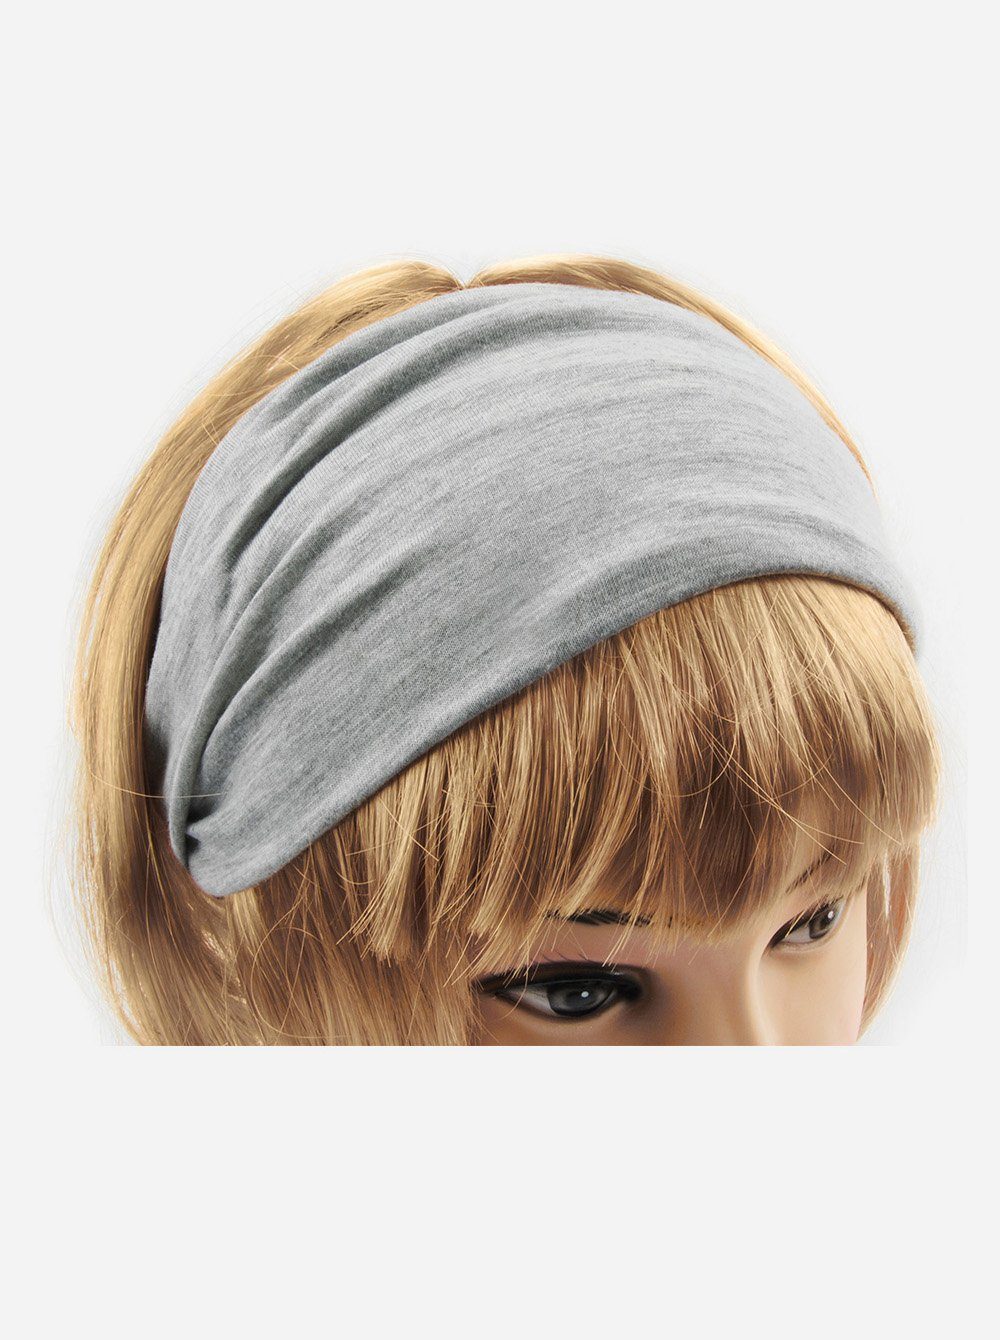 axy Haarband Damen Haarband Sport Hellgrau und Kopfband, Yoga Hairband Stirnband für